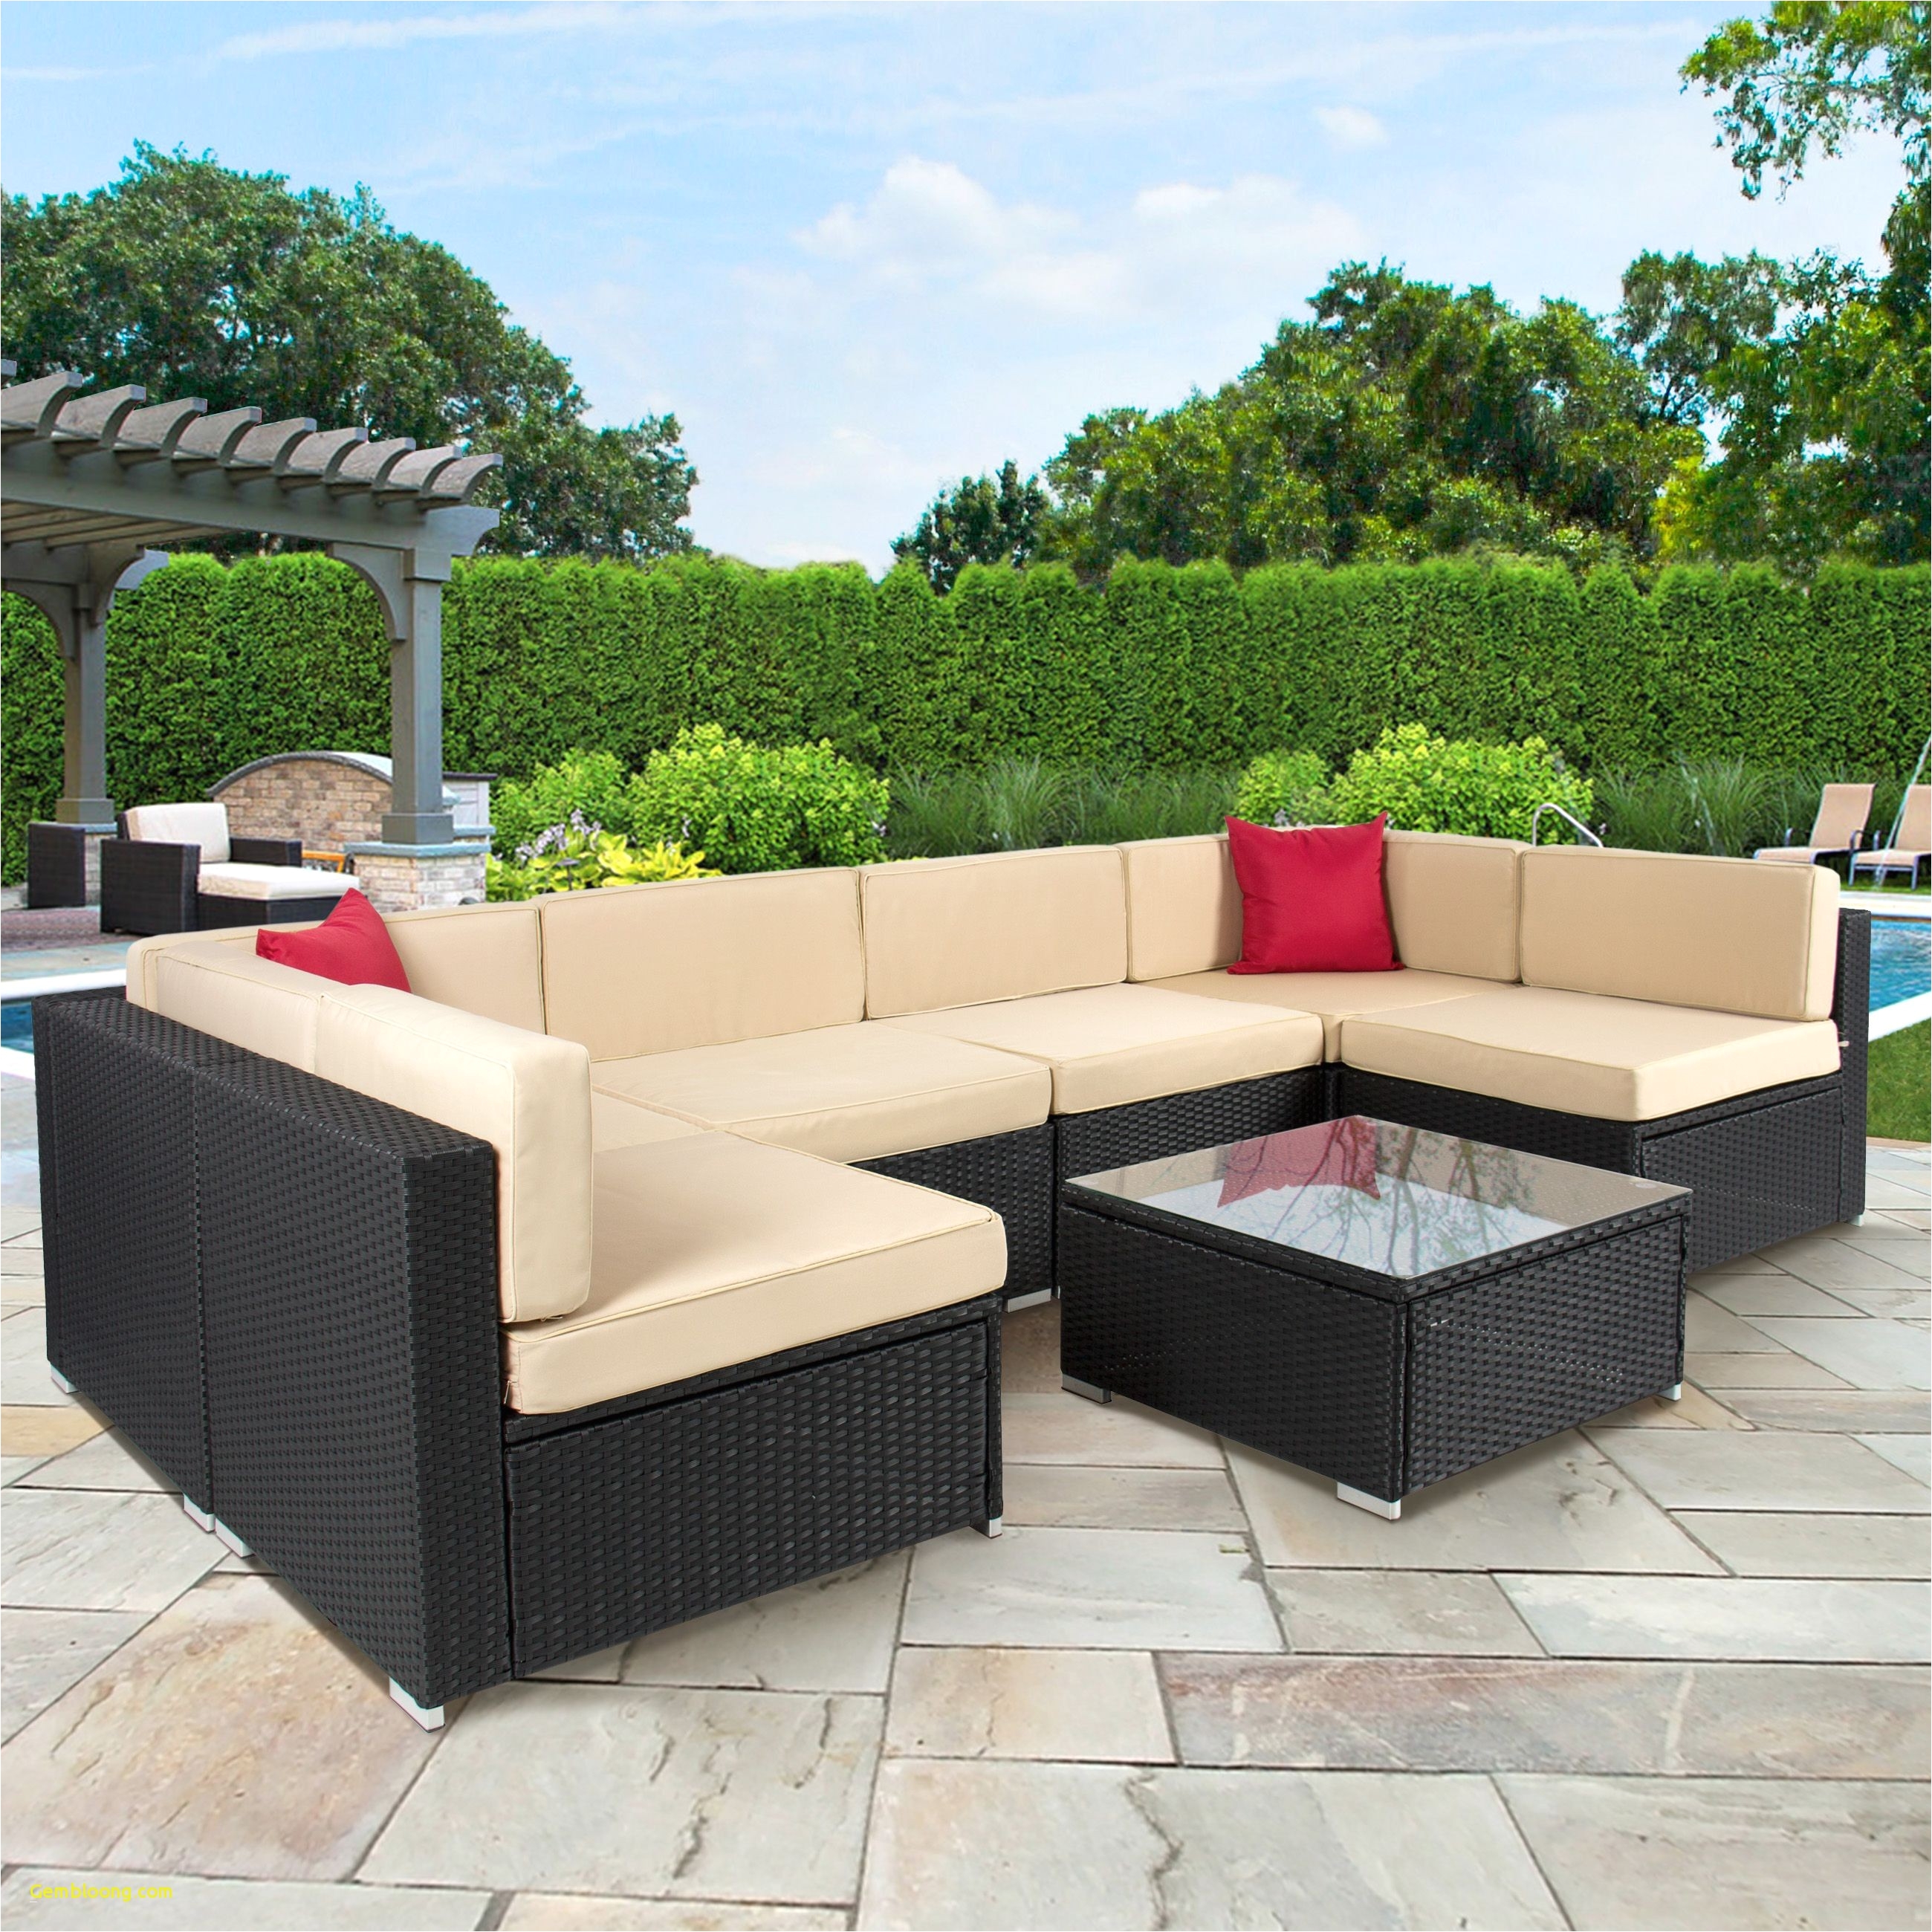 10 elegant jcpenney patio furniture 70 off bossconseil